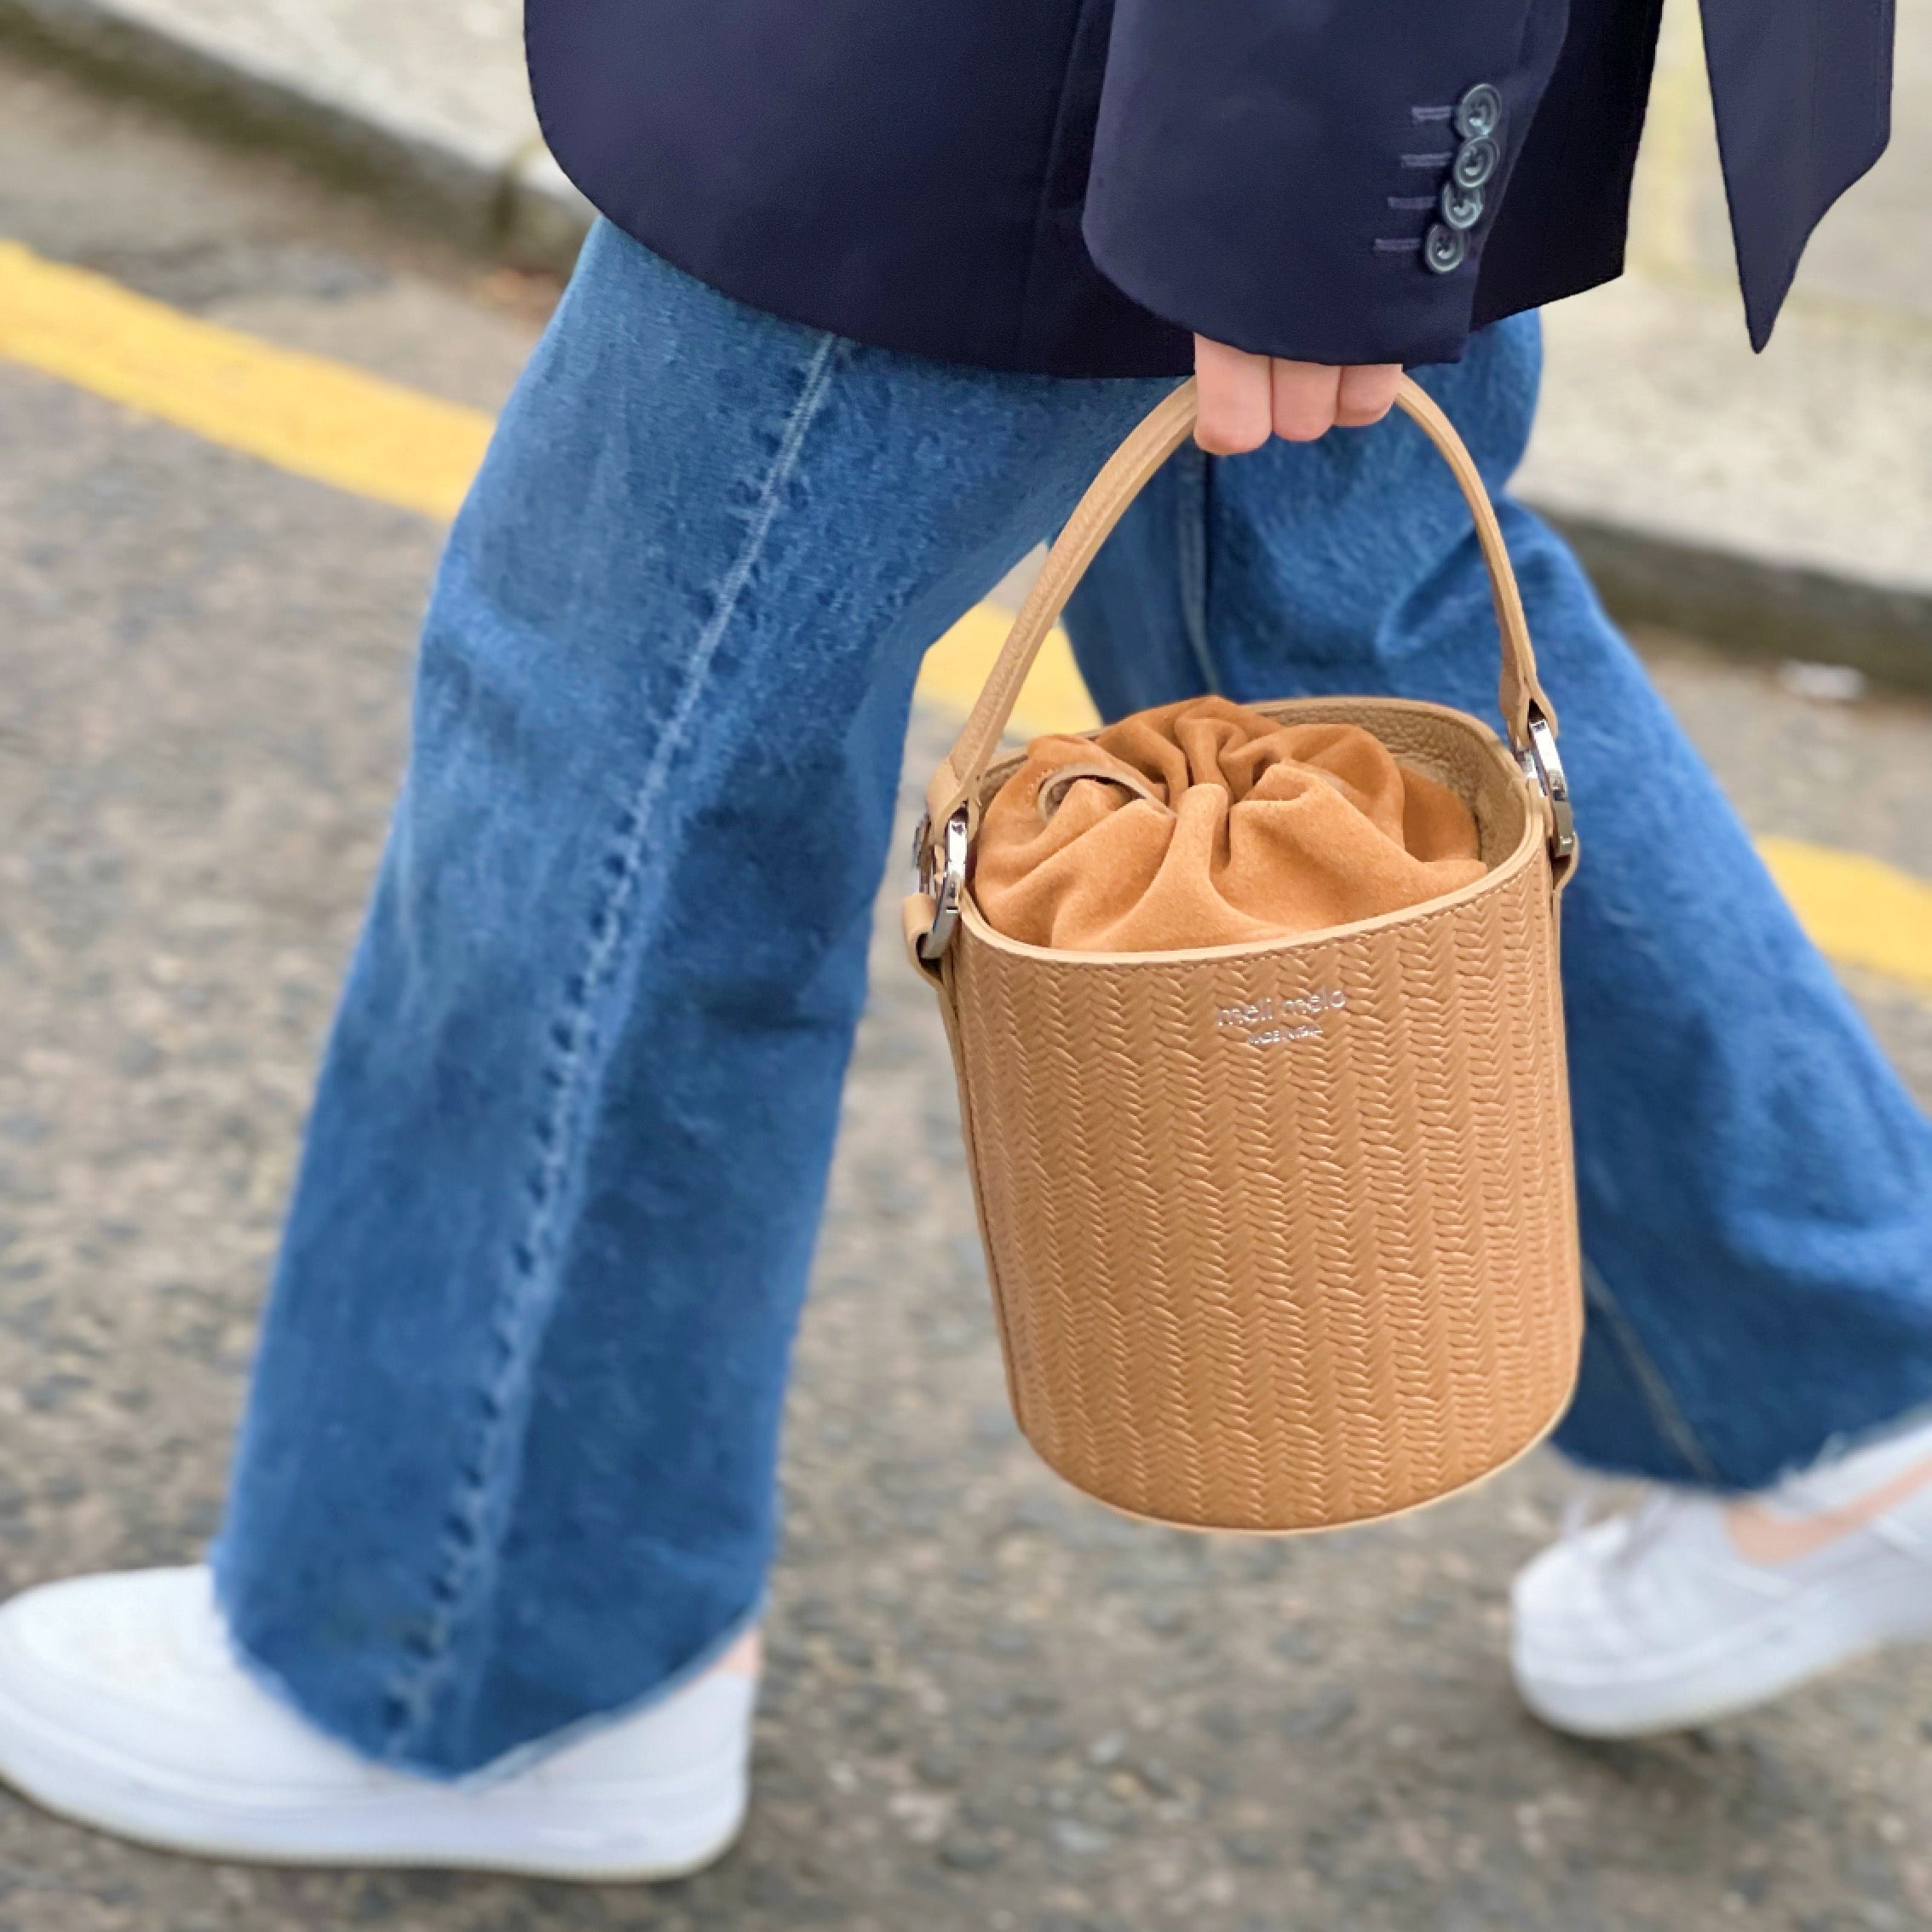 meli melo: This season's must-have bucket bag: The Santina